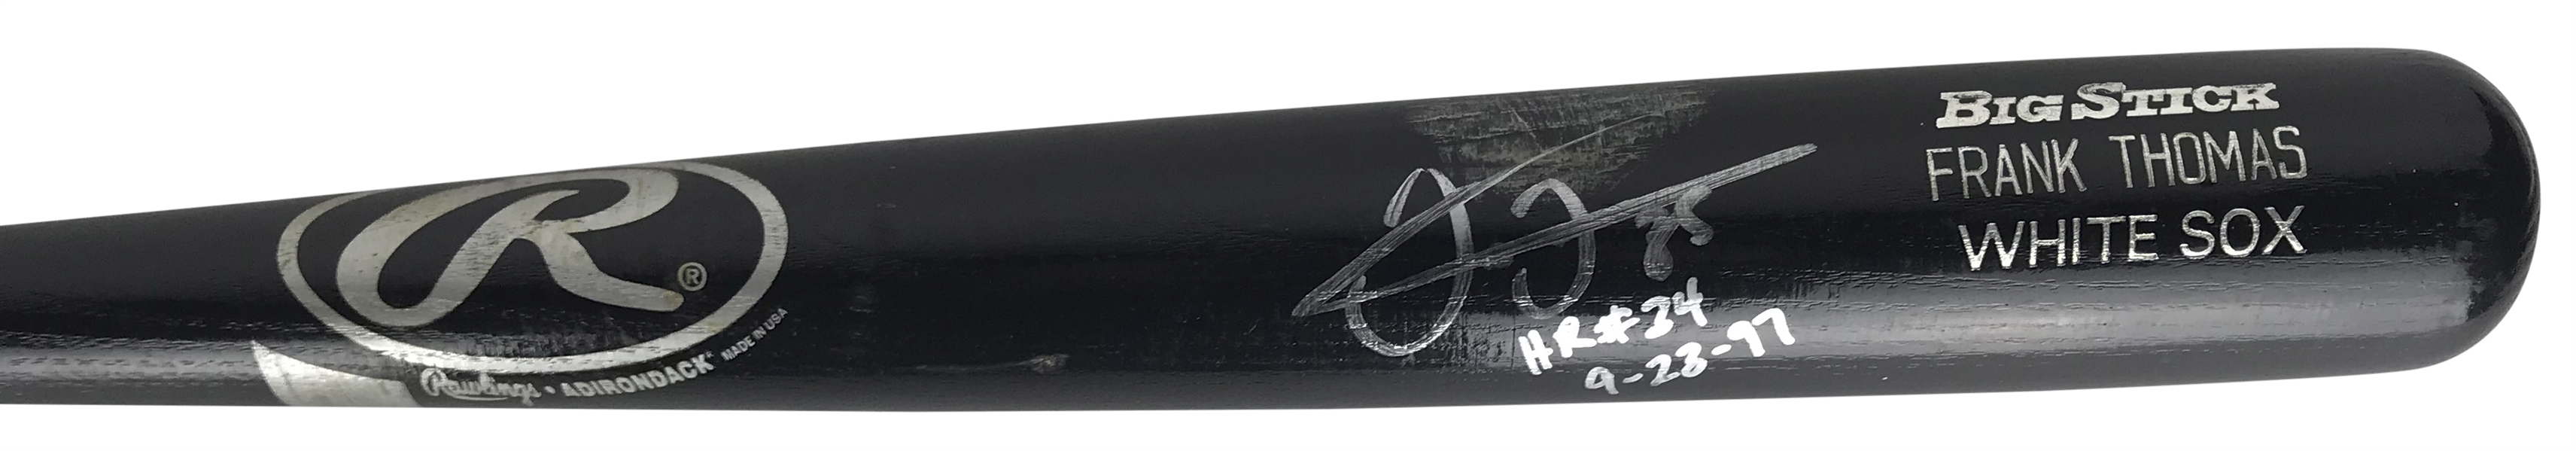 1997 Frank Thomas Signed & Game Used LS 576B Pro Model Bat :: Used for 34th HR of Season :: Big Hurt COA & PSA/DNA GU 9!